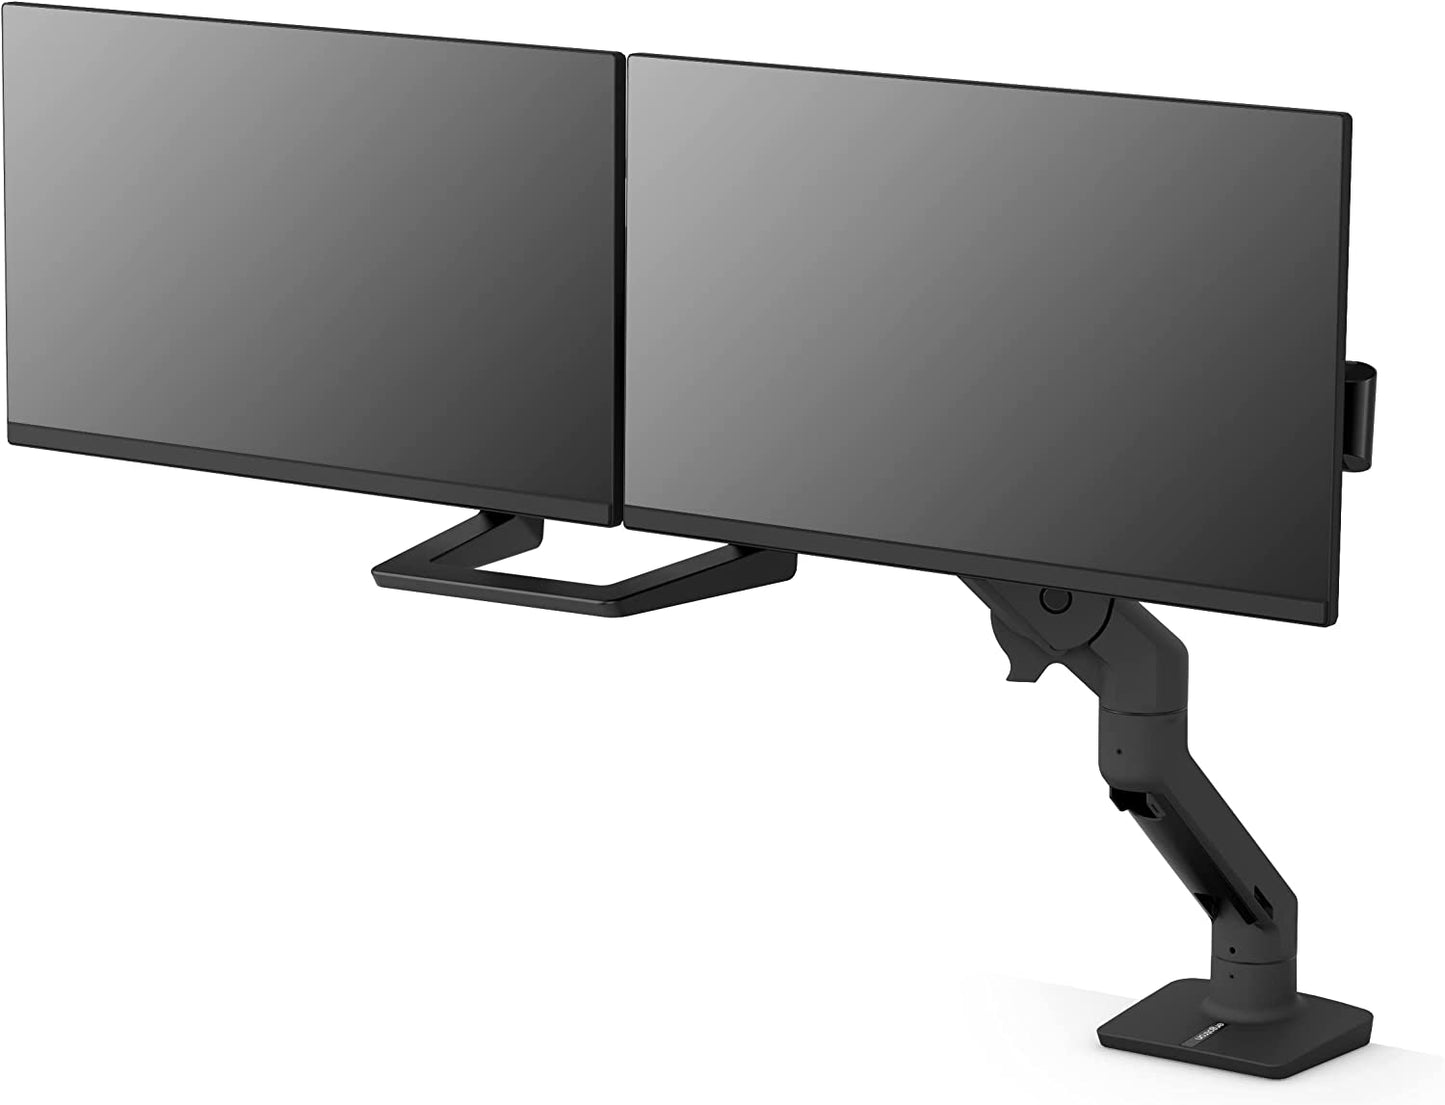 Ergotron Desk Mount for Dual Monitors - Matte Black - up to 32" Screen, 35 lb Load